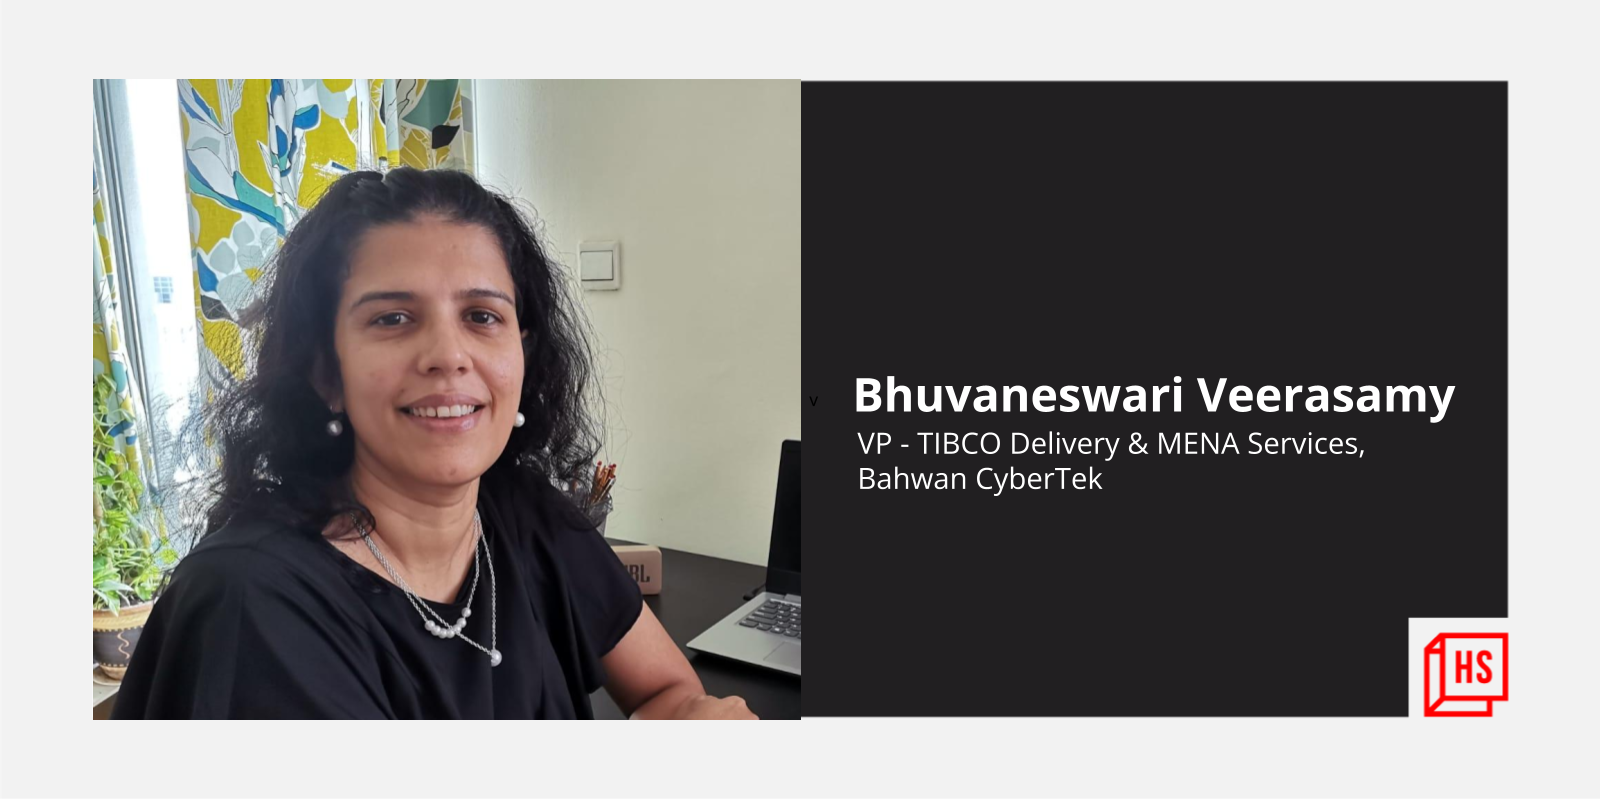 [Women in Tech] Bahwan CyberTek VP makes the case for flexible models and inclusive workspaces
